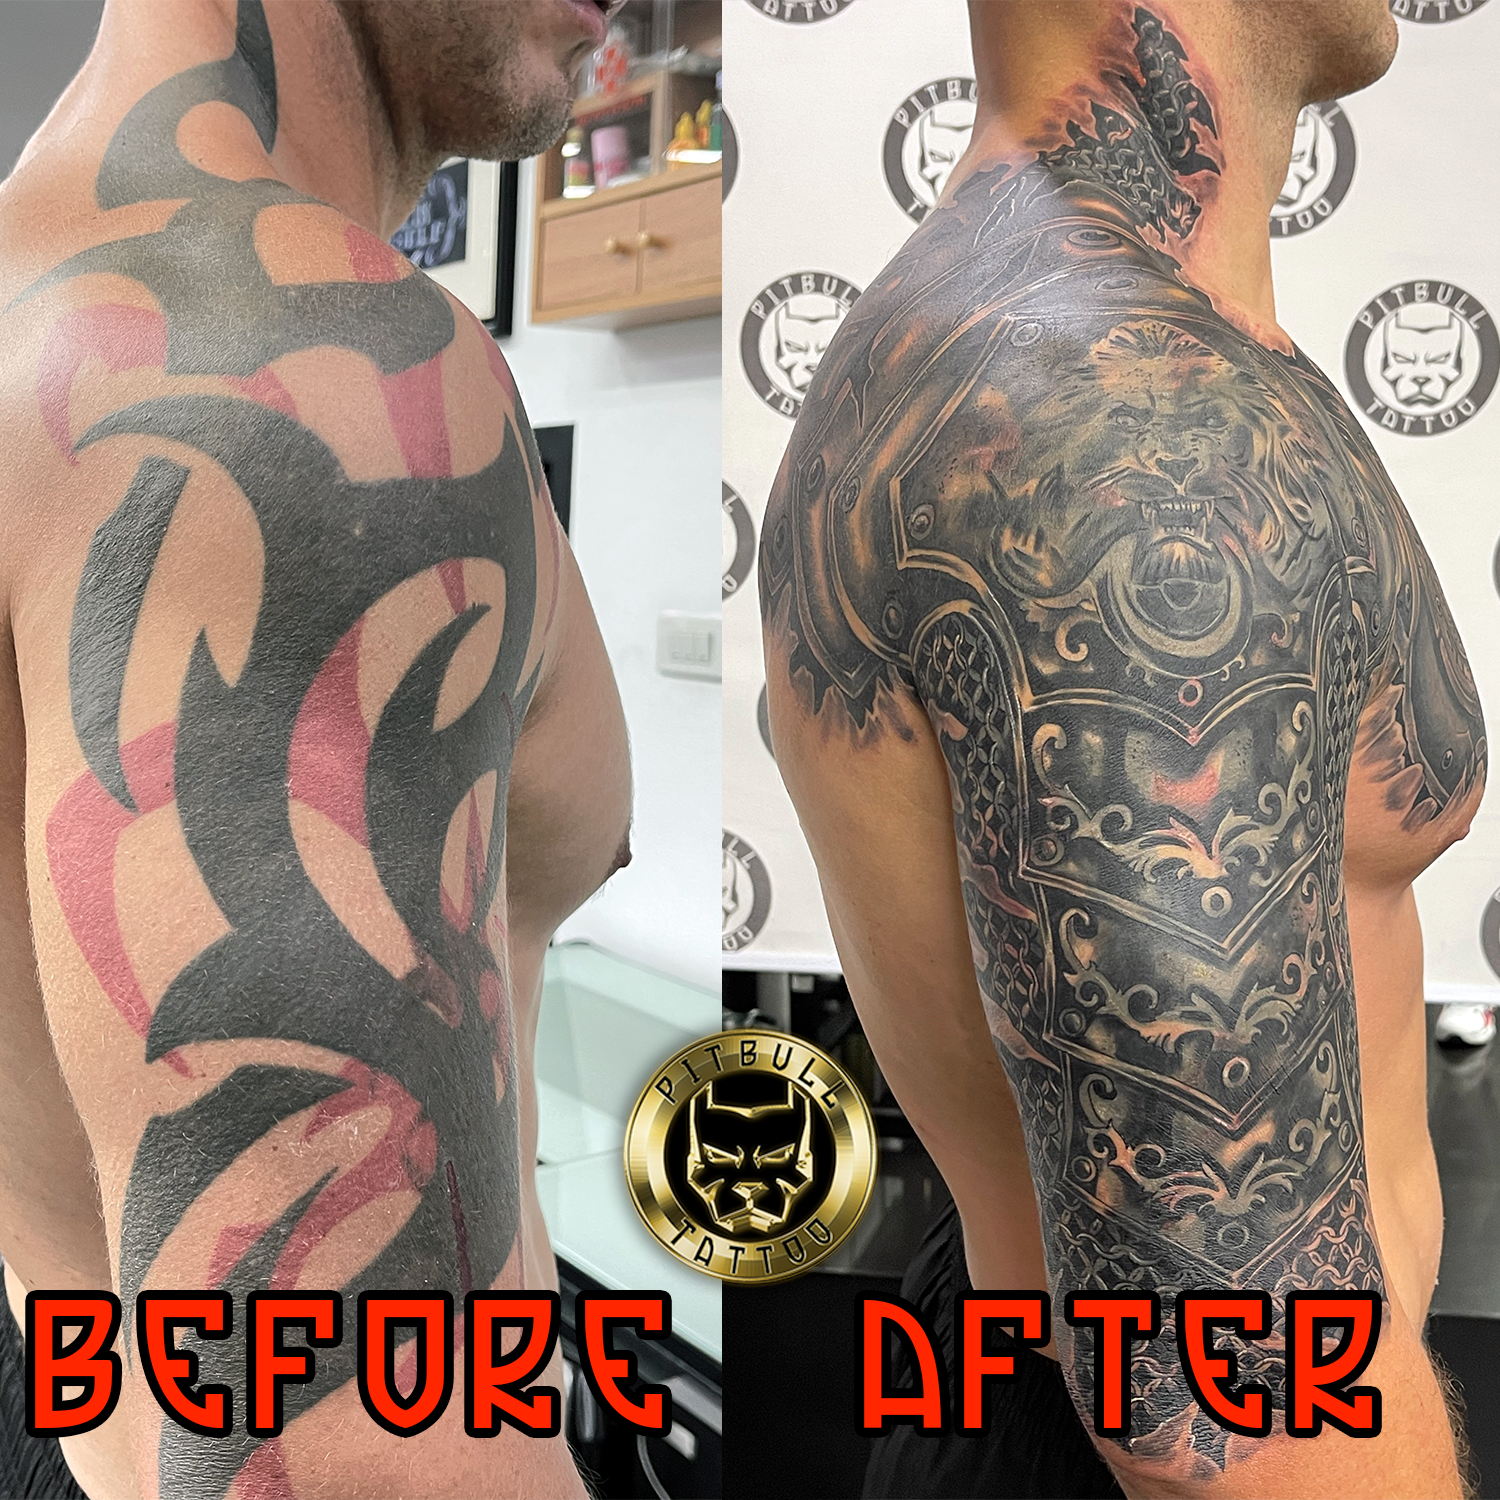 Cover Up Tattoo Specialization at Pitbull Tattoo Phuket